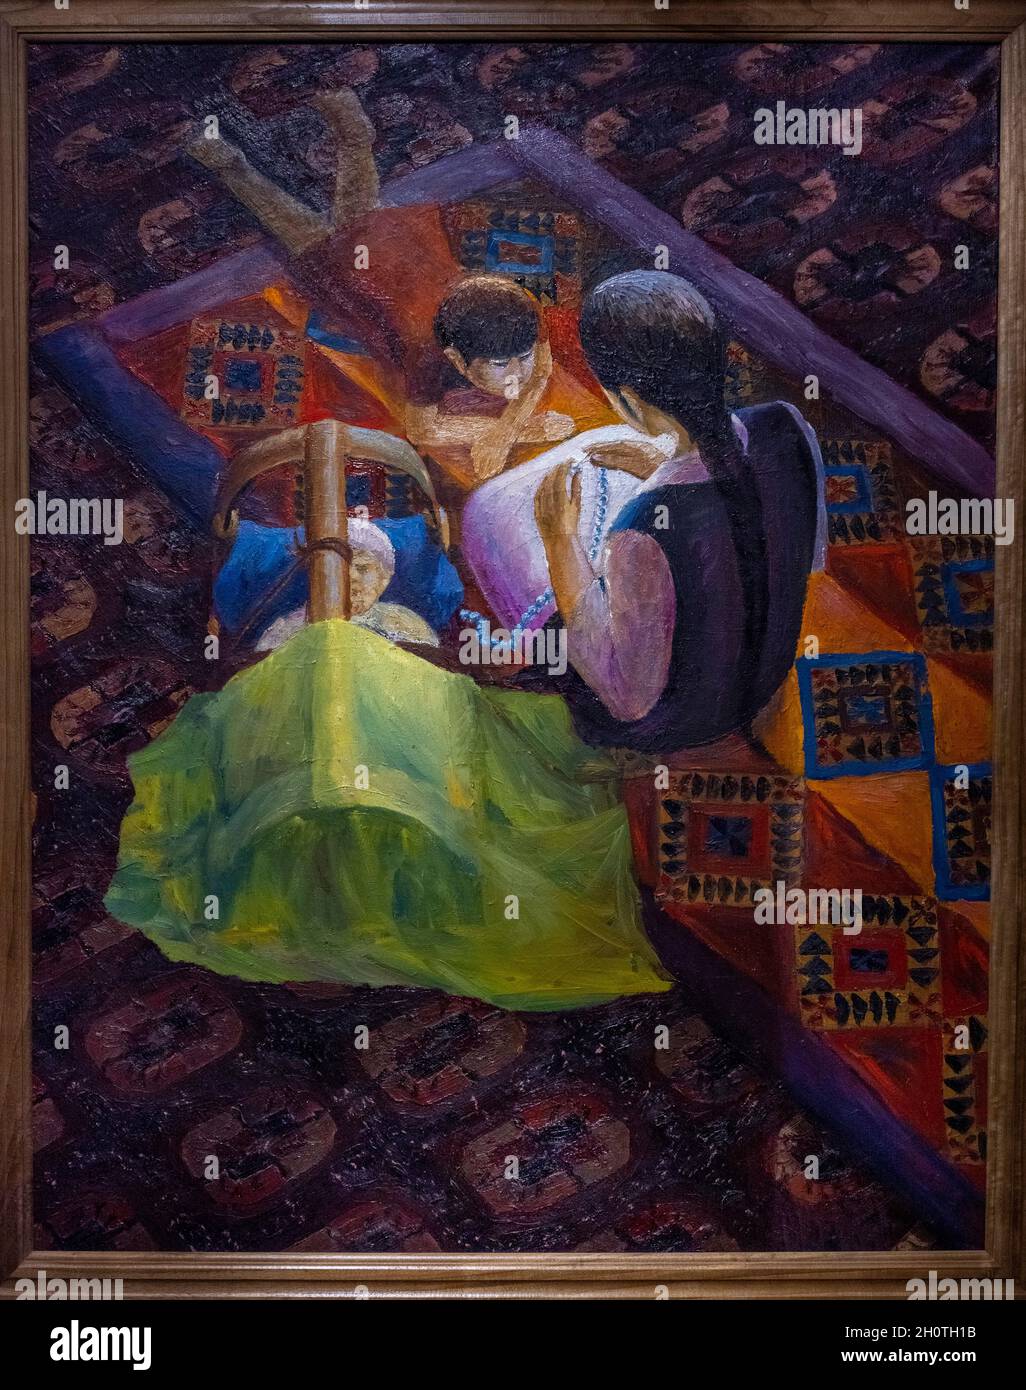 A. Berjanov, Ketten für Tochter, 1978, Öl auf Leinwand, Nukus Museum of Art (Savitsky Museum), Nukus, Karakalpakstan, Usbekistan Stockfoto